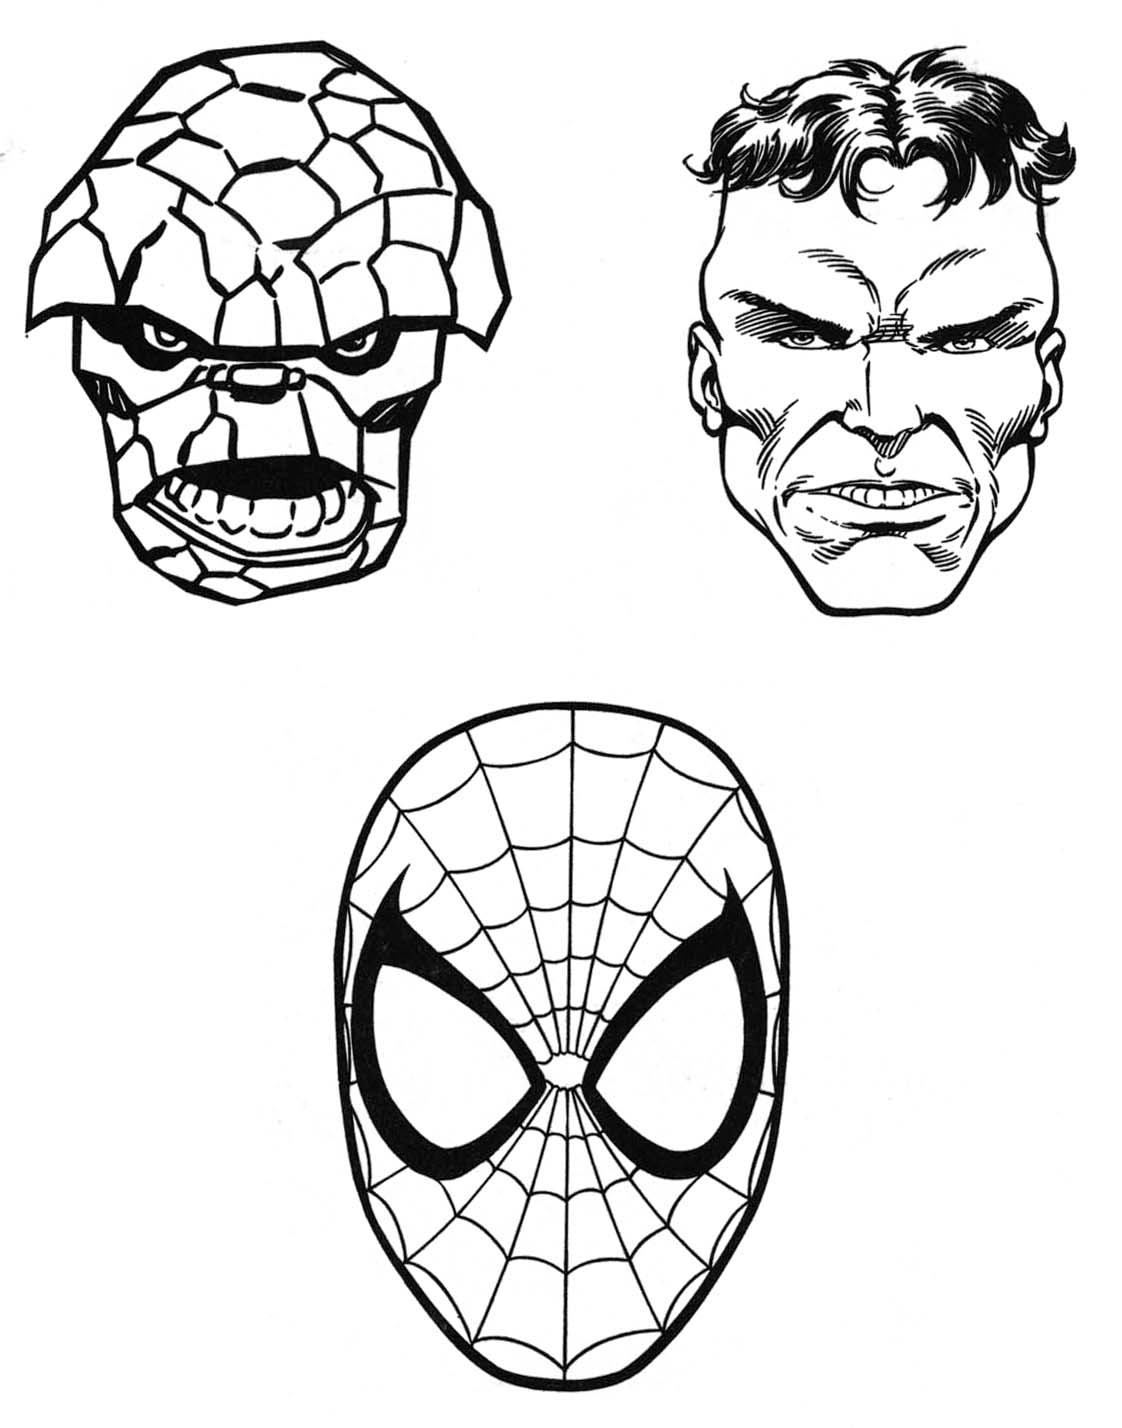 Drawing Marvel Super Heroes #79597 (Superheroes) – Printable coloring pages